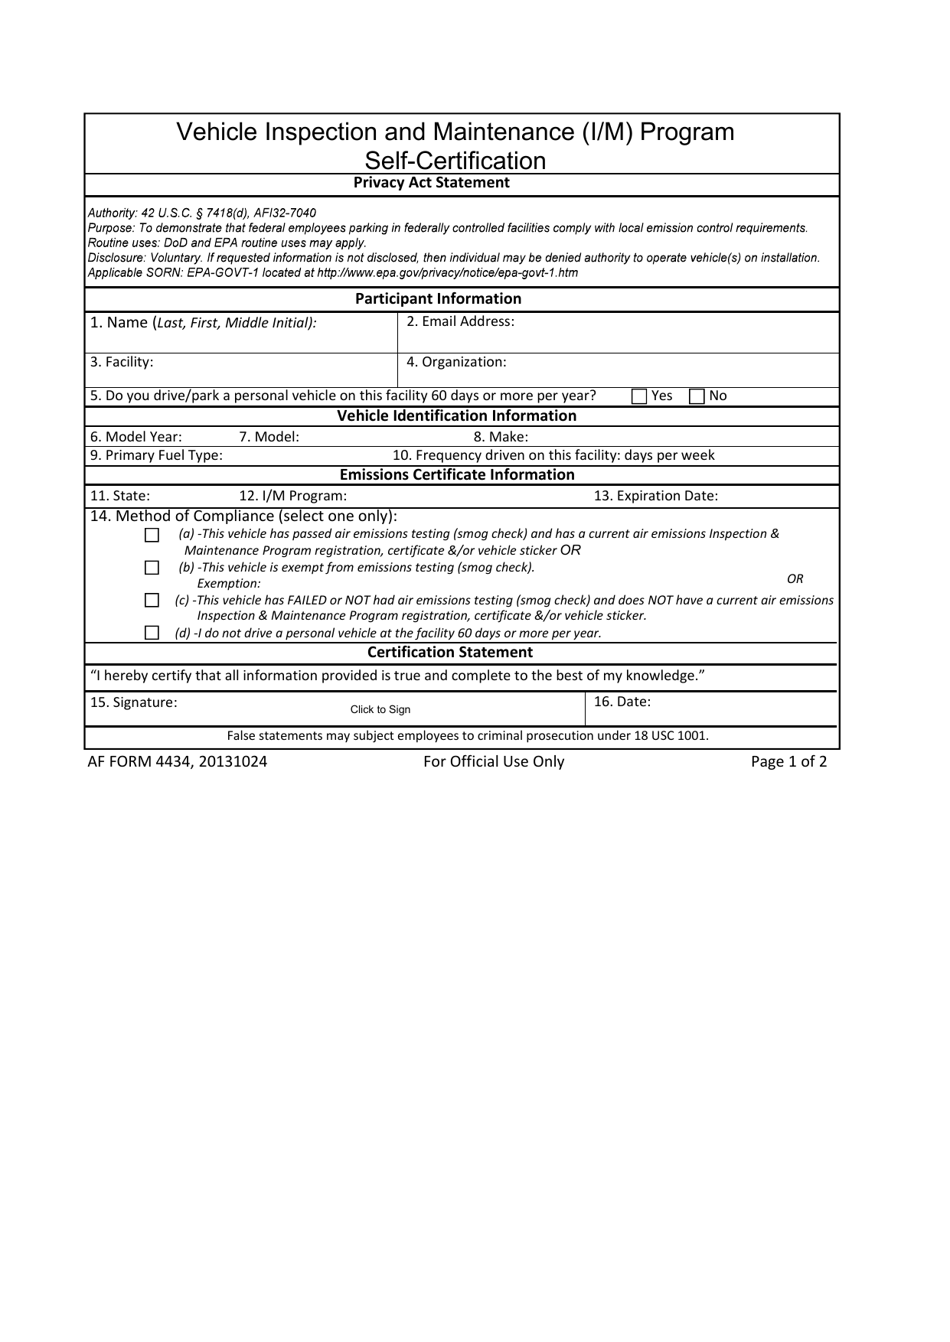 AF Form 4434 Vehicle Inspection and Maintenance (I / M) Program Self Certification, Page 1